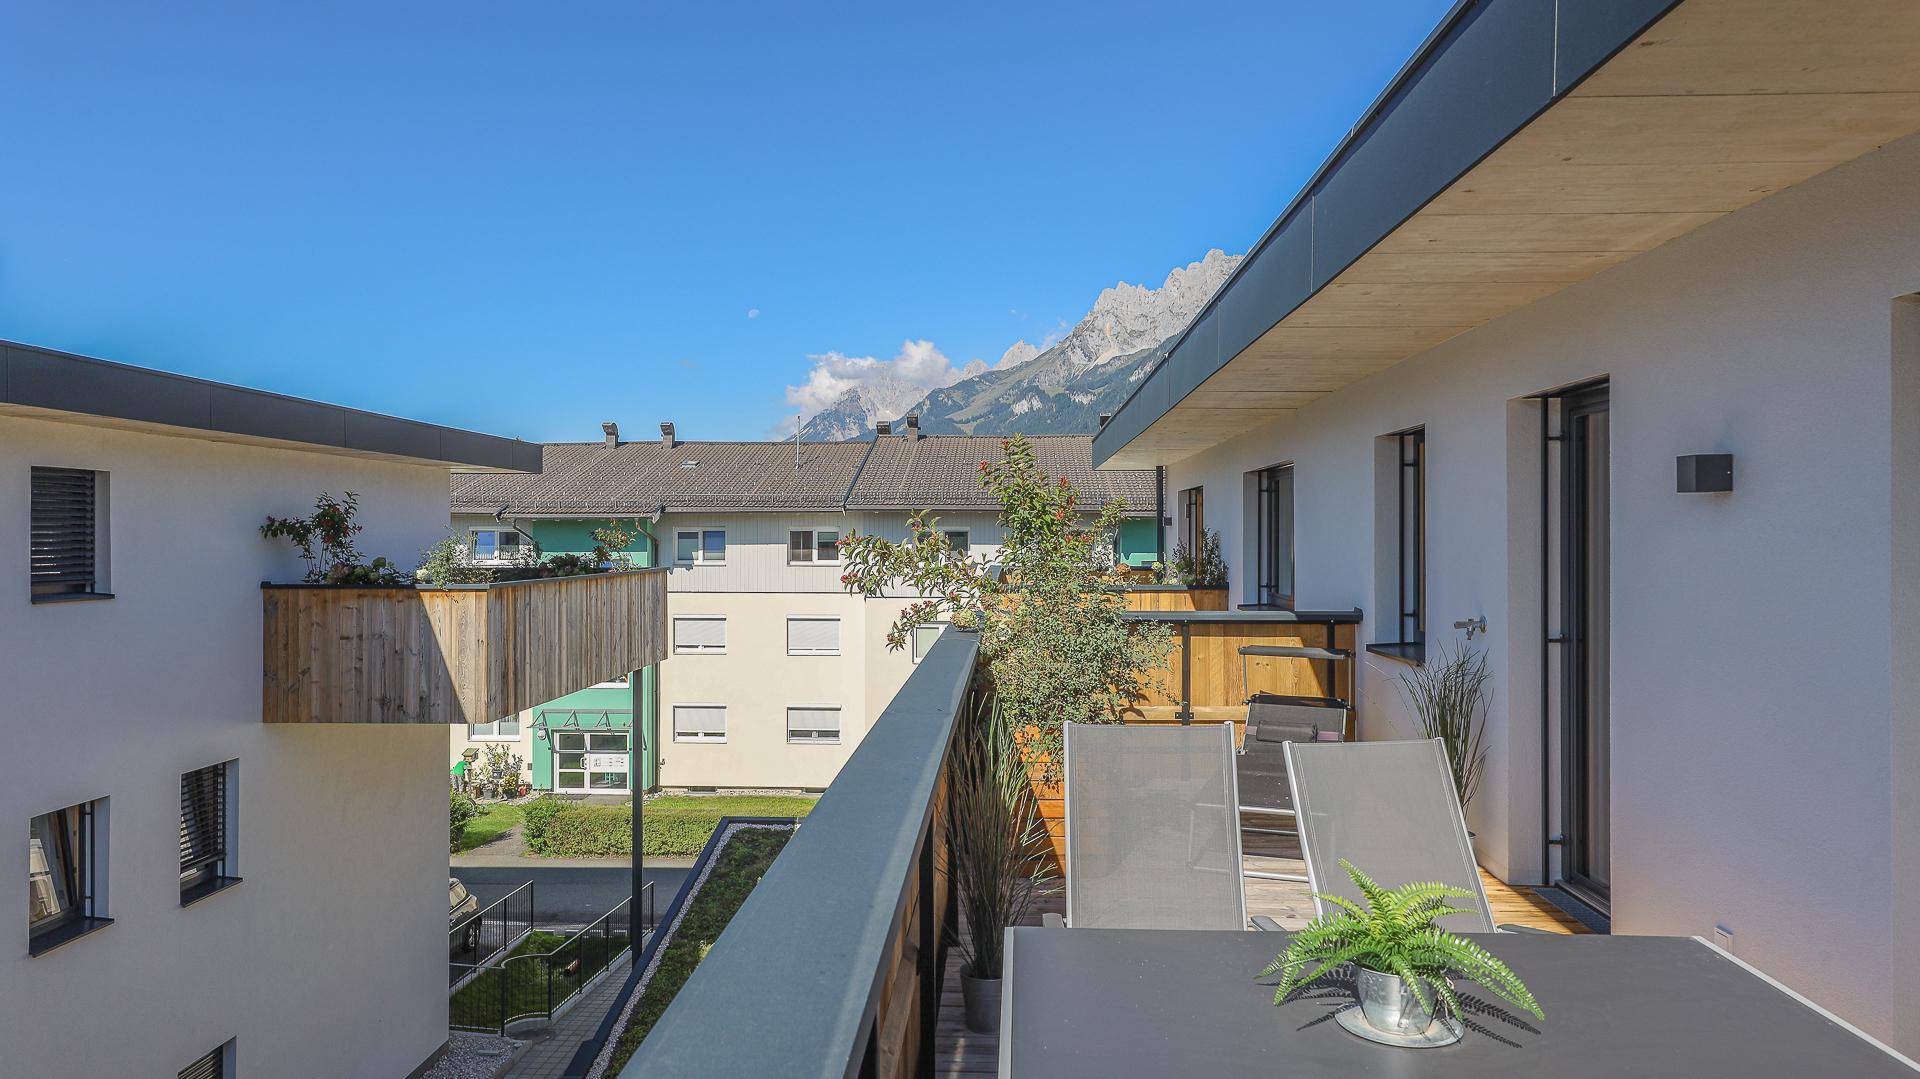 Exklusives Penthouse in zentraler Toplage in St. Johann in Tirol kaufen.